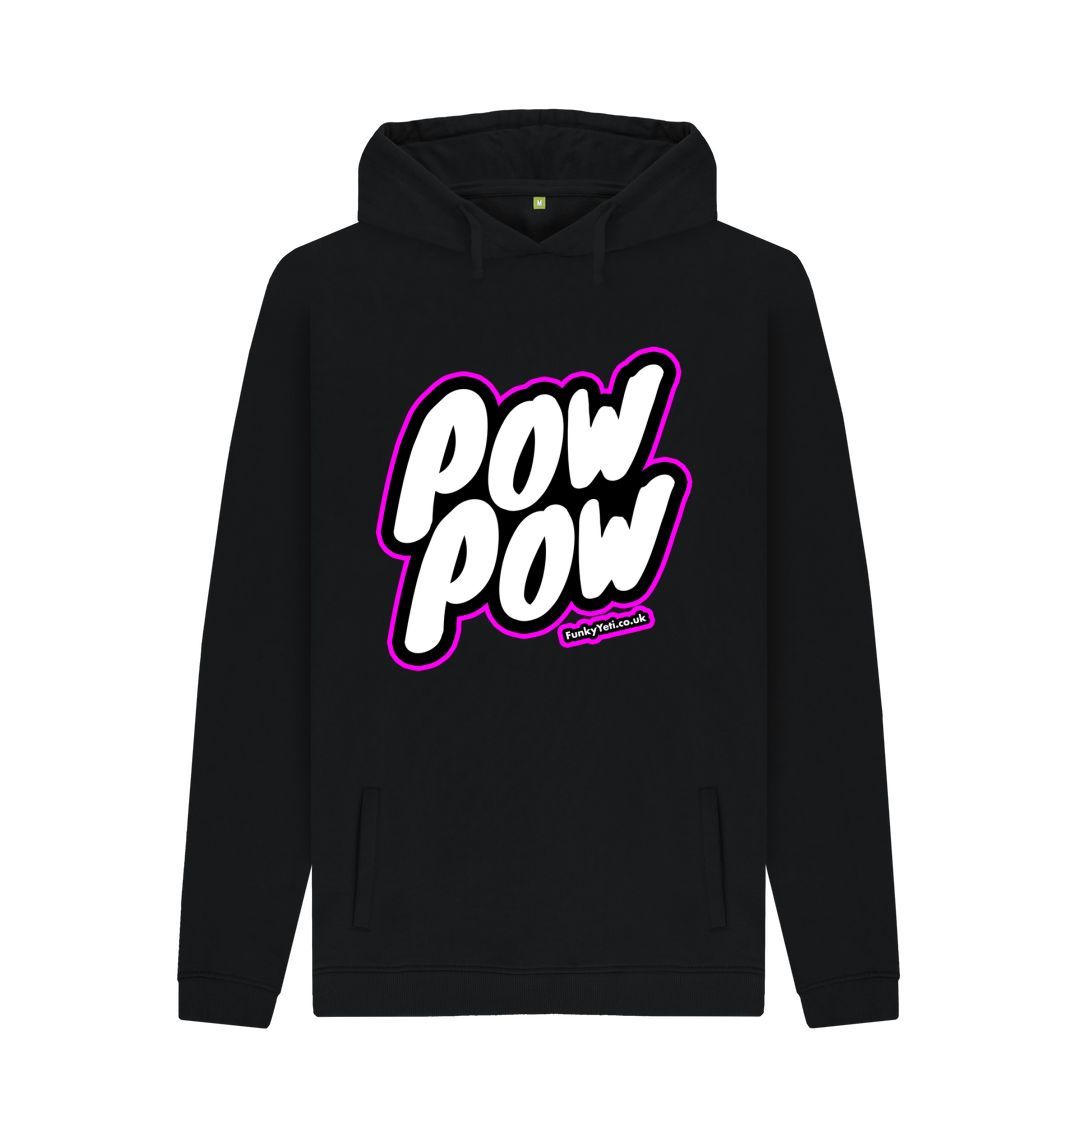 Black Men's Pow Pow Organic Pullover Hoodie - Hot Pink